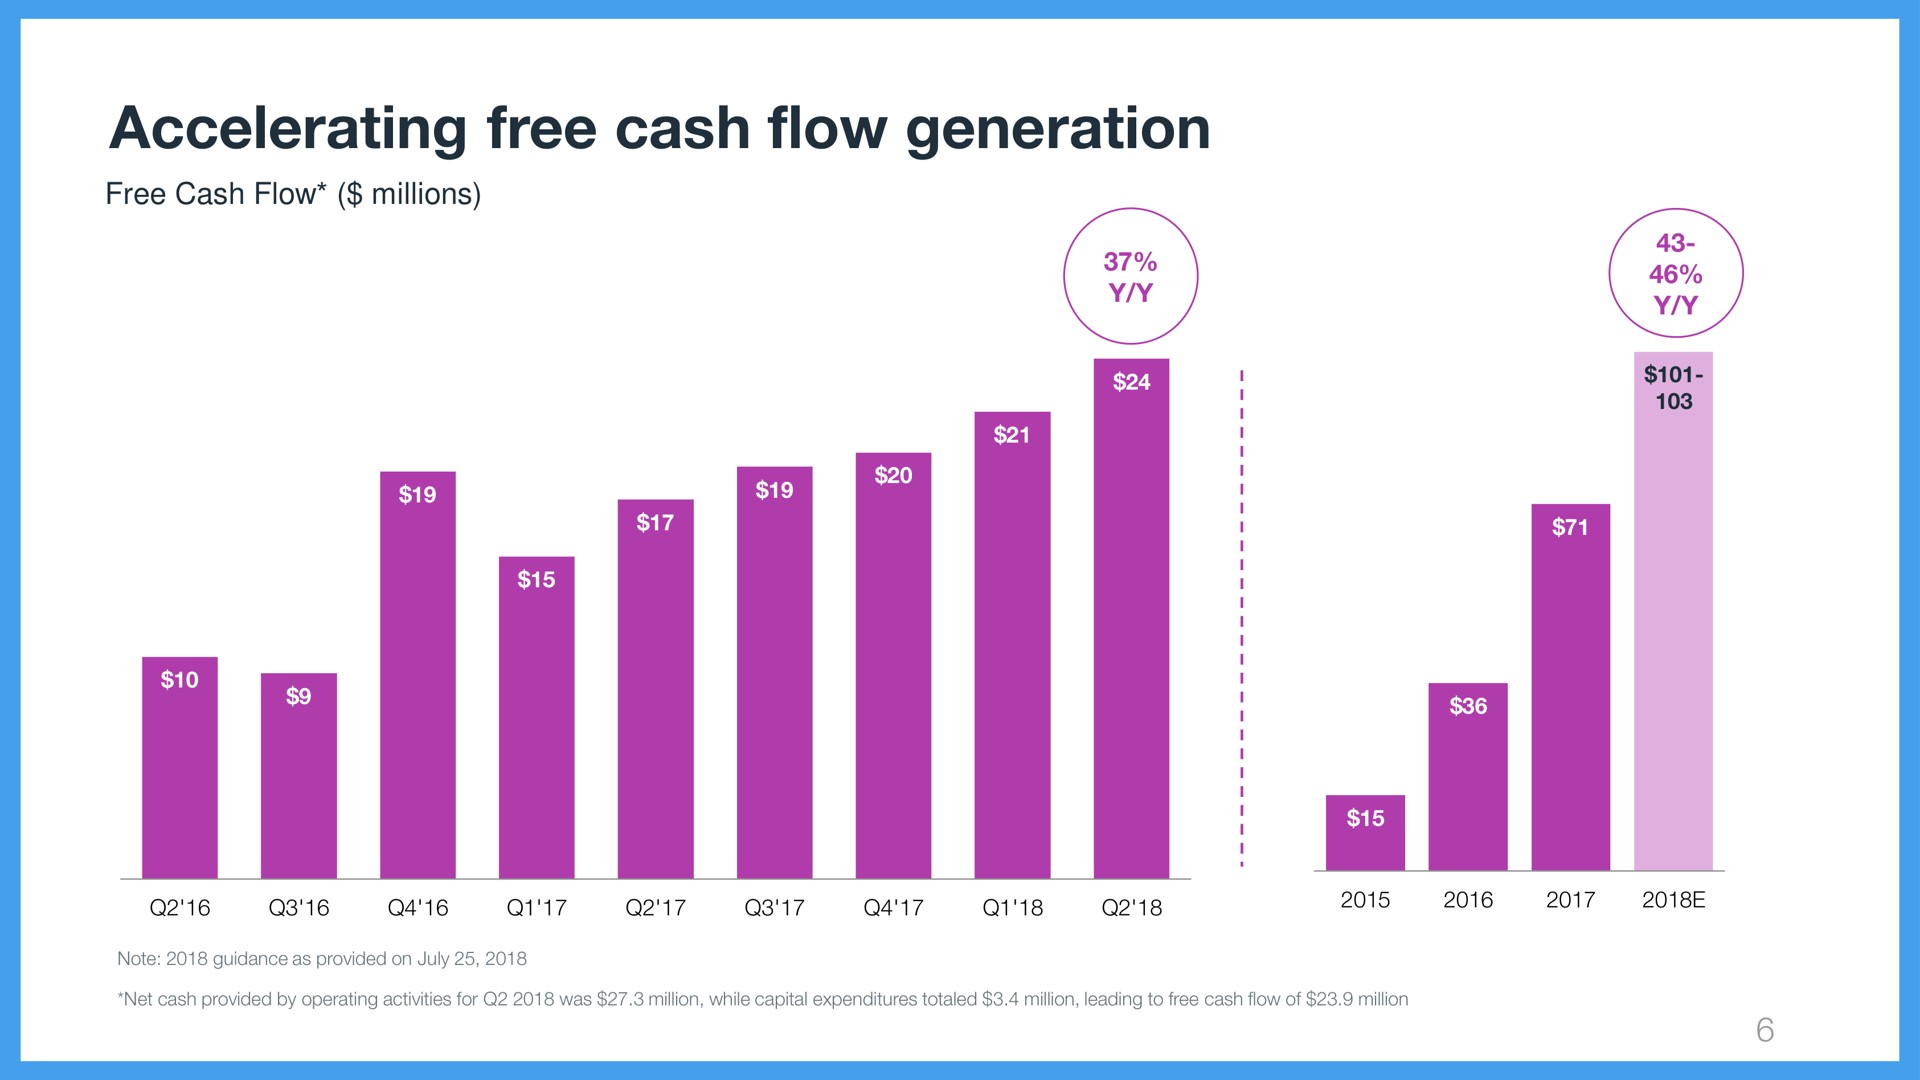 accelerating free cash flow generation | Wix